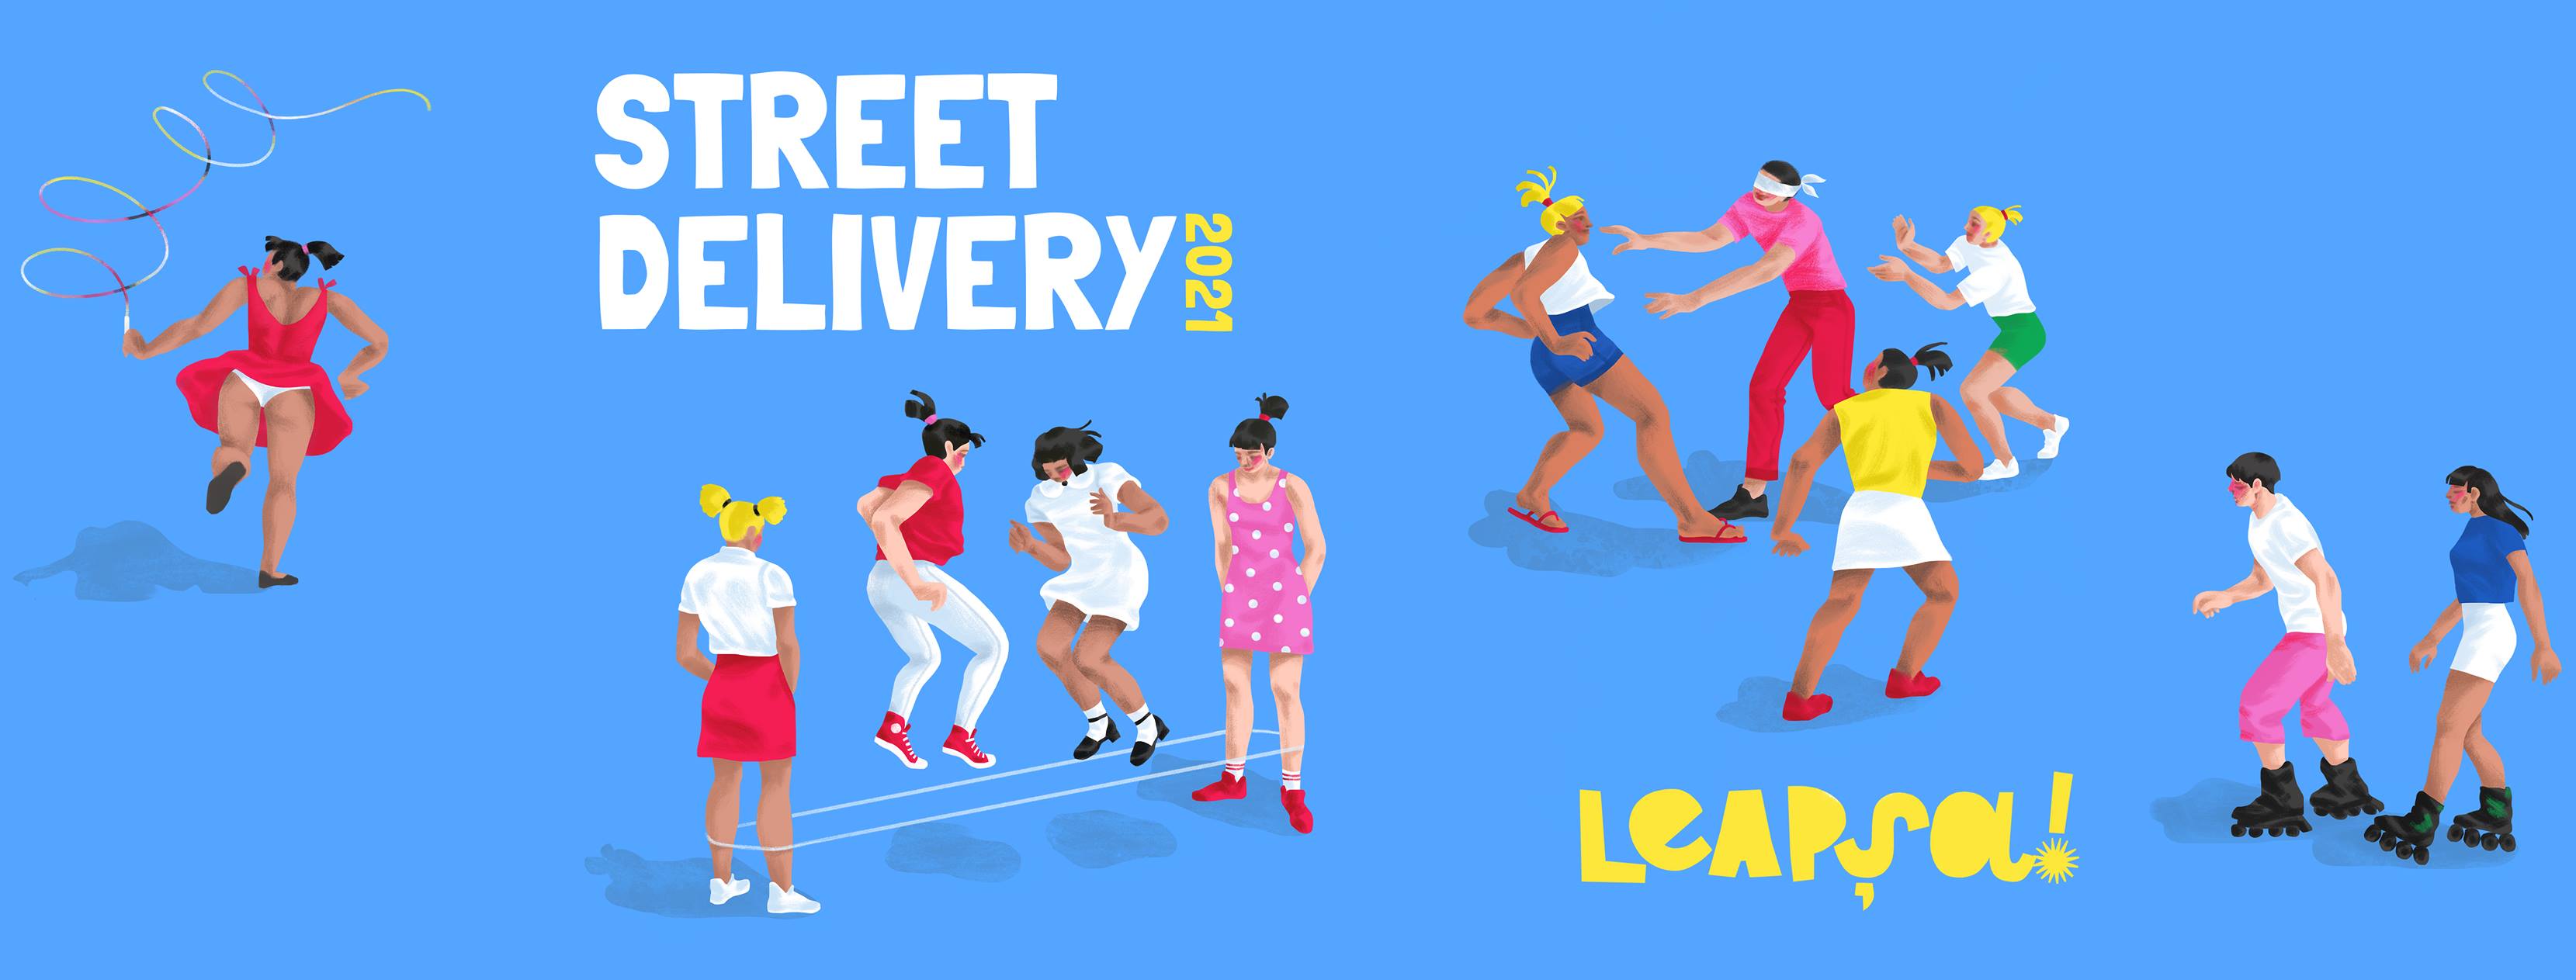 Street Delivery Sibiu 2021 - Leapșa